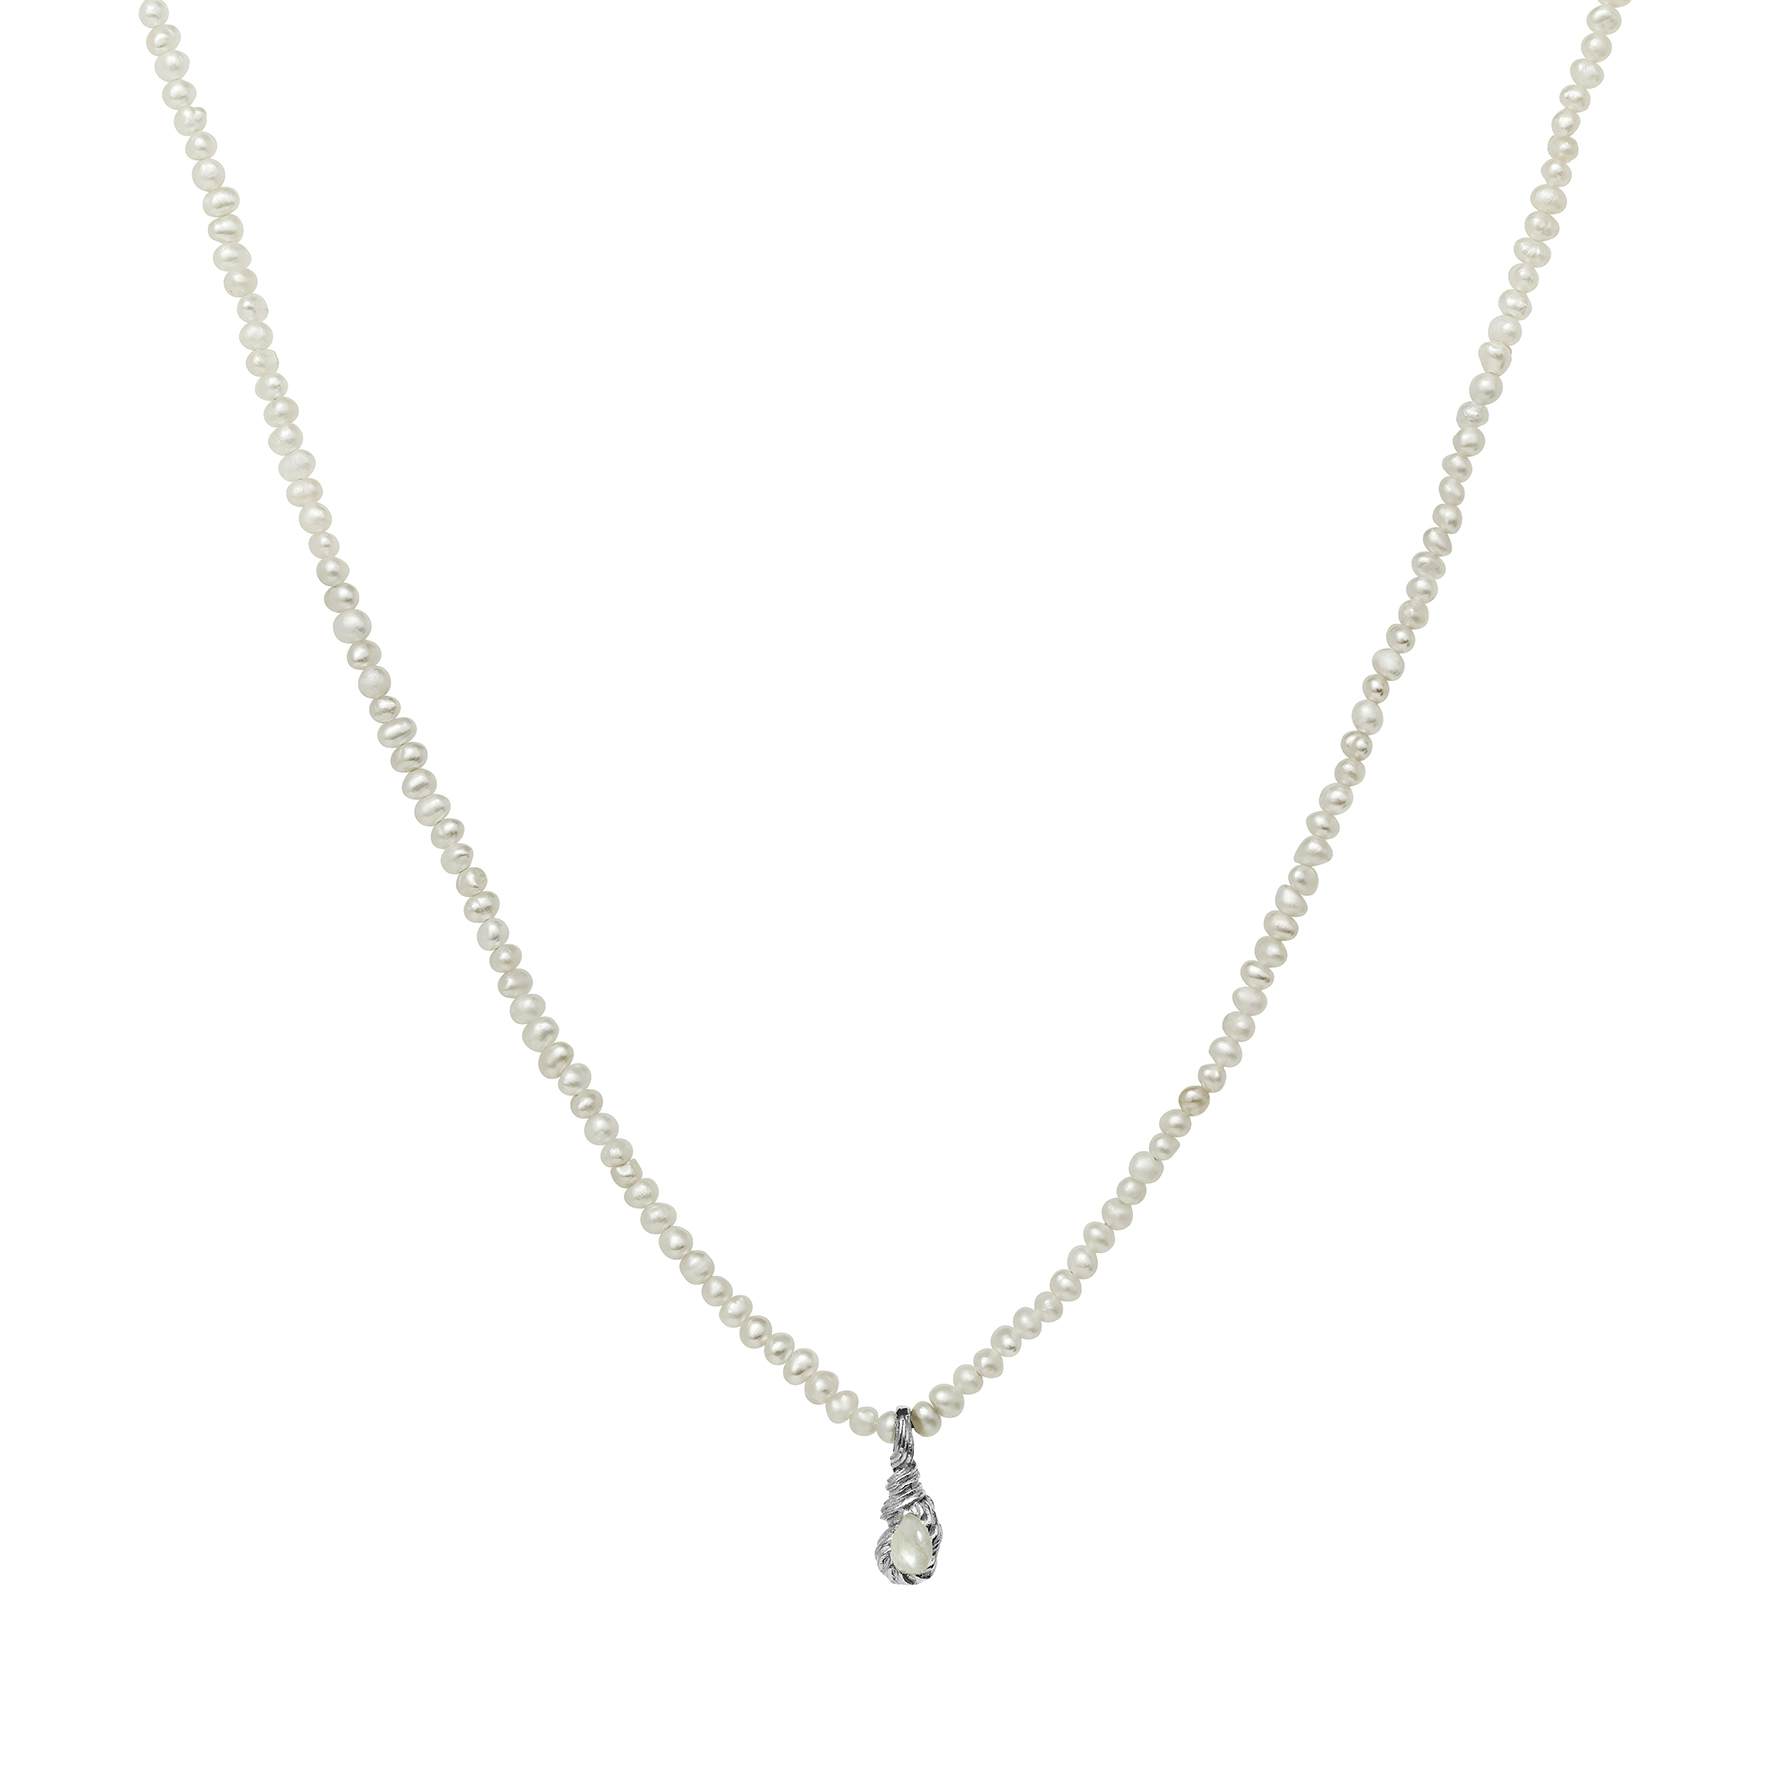 Aqua Necklace fra Maanesten i Sølv Sterling 925|Freshwater Pearl